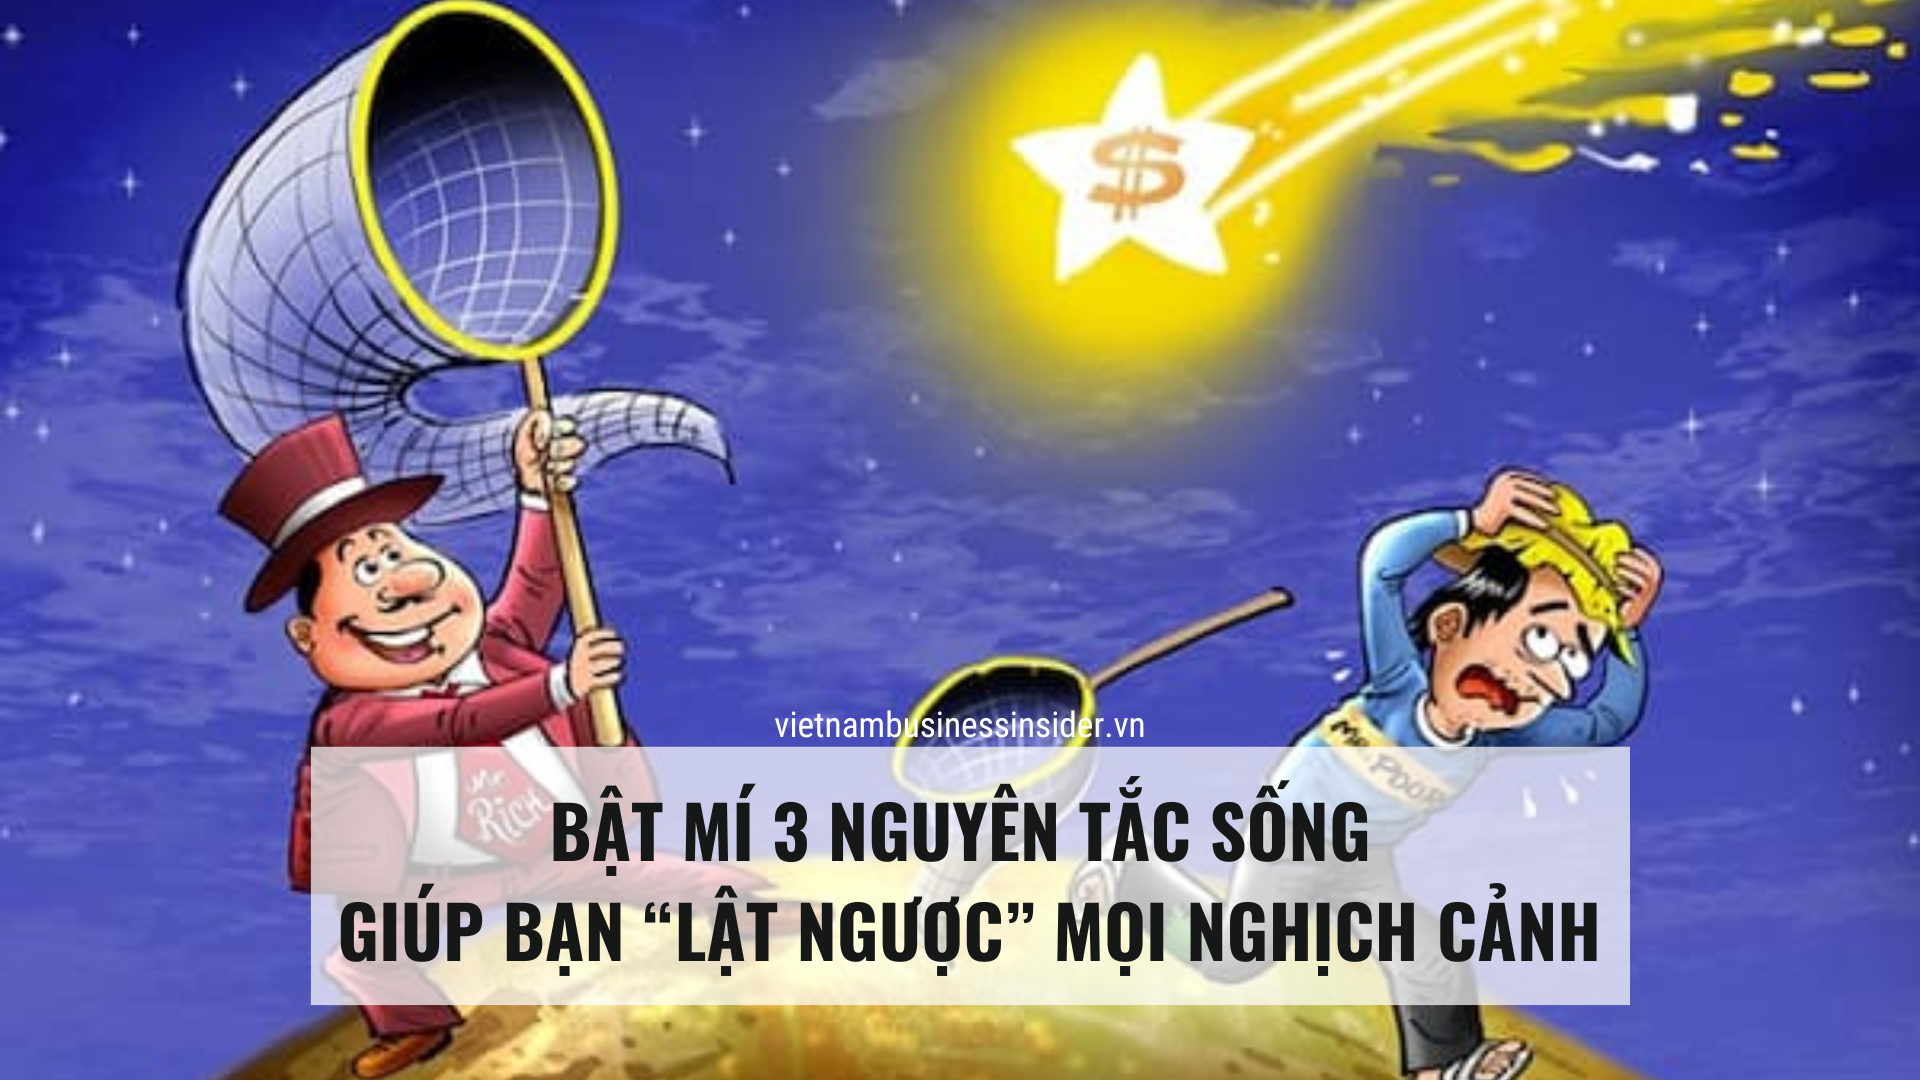 bat-mi-3-nguyen-tac-song-giup-ban-lat-nguoc-moi-nghich-canh-1675069878.png